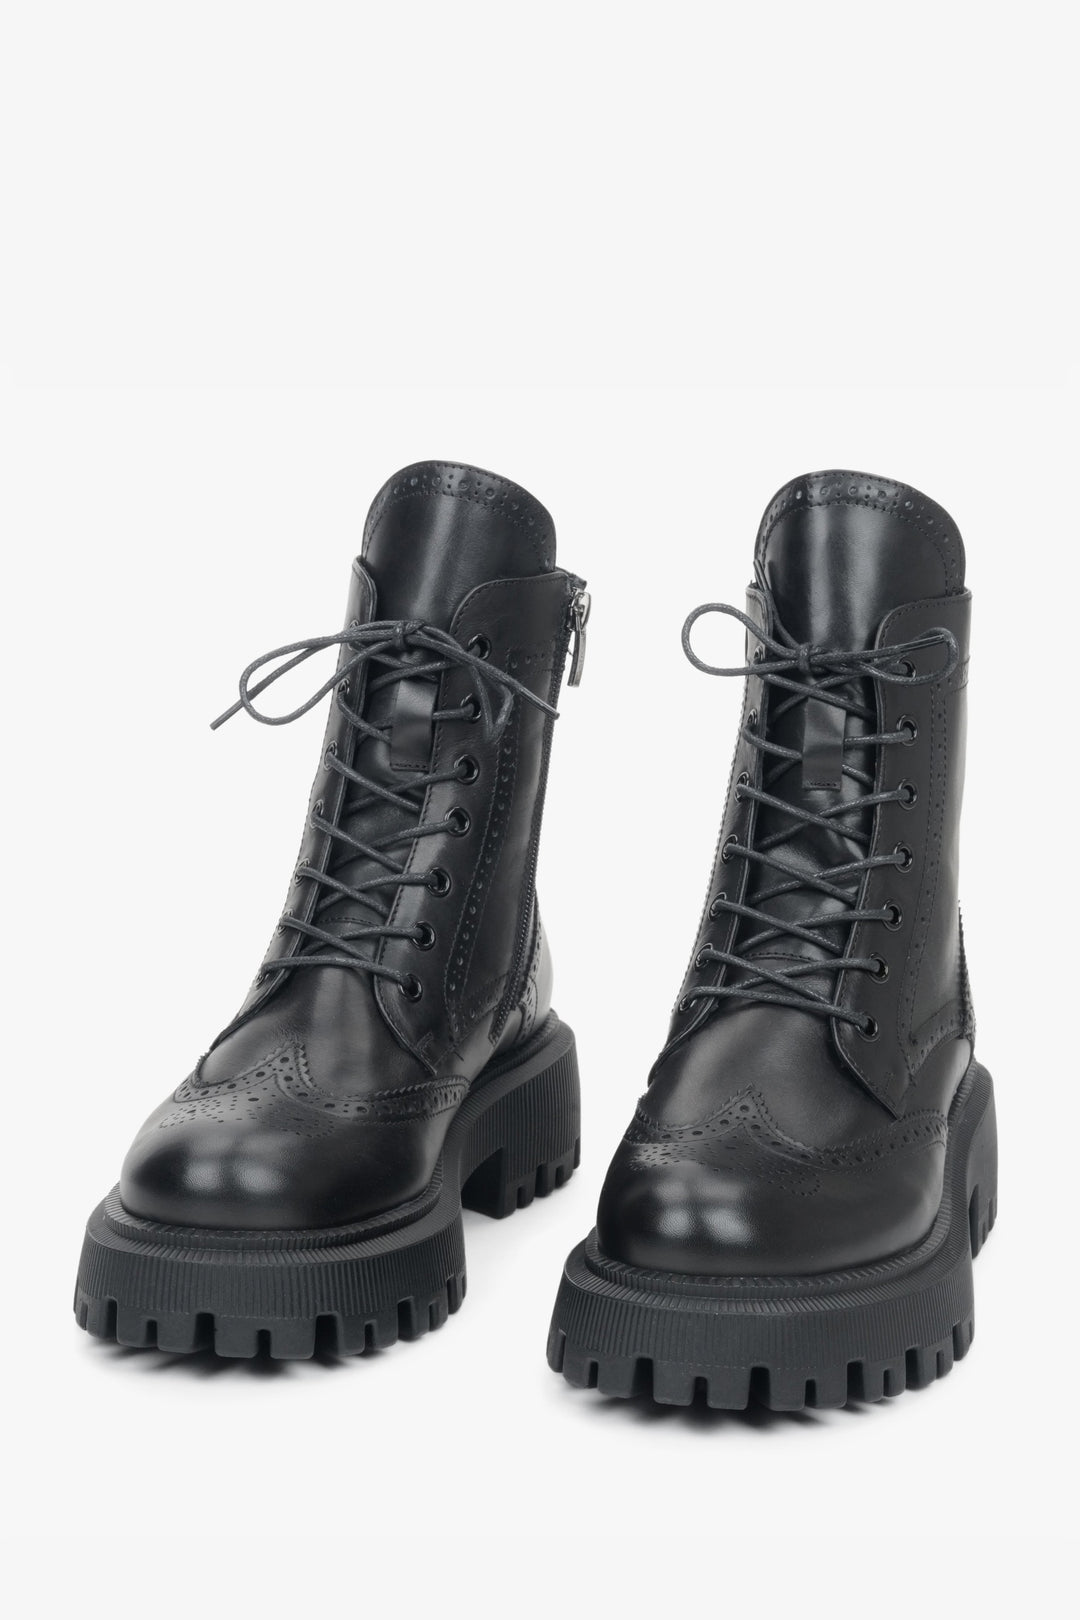 Black leather Estro women's ankle boots with laces by Estro.